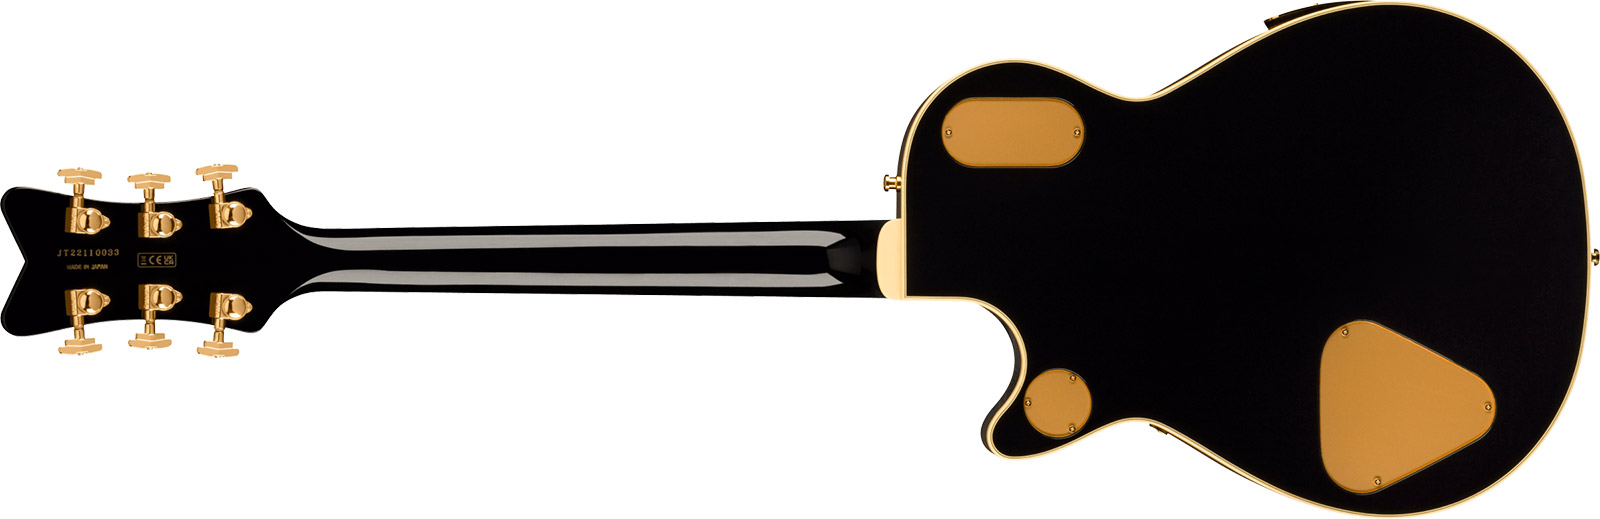 Gretsch G6134tg Paisley Penguin Bigsby Pro Jap 2h Trem Eb - Black Paisley - Single cut electric guitar - Variation 1